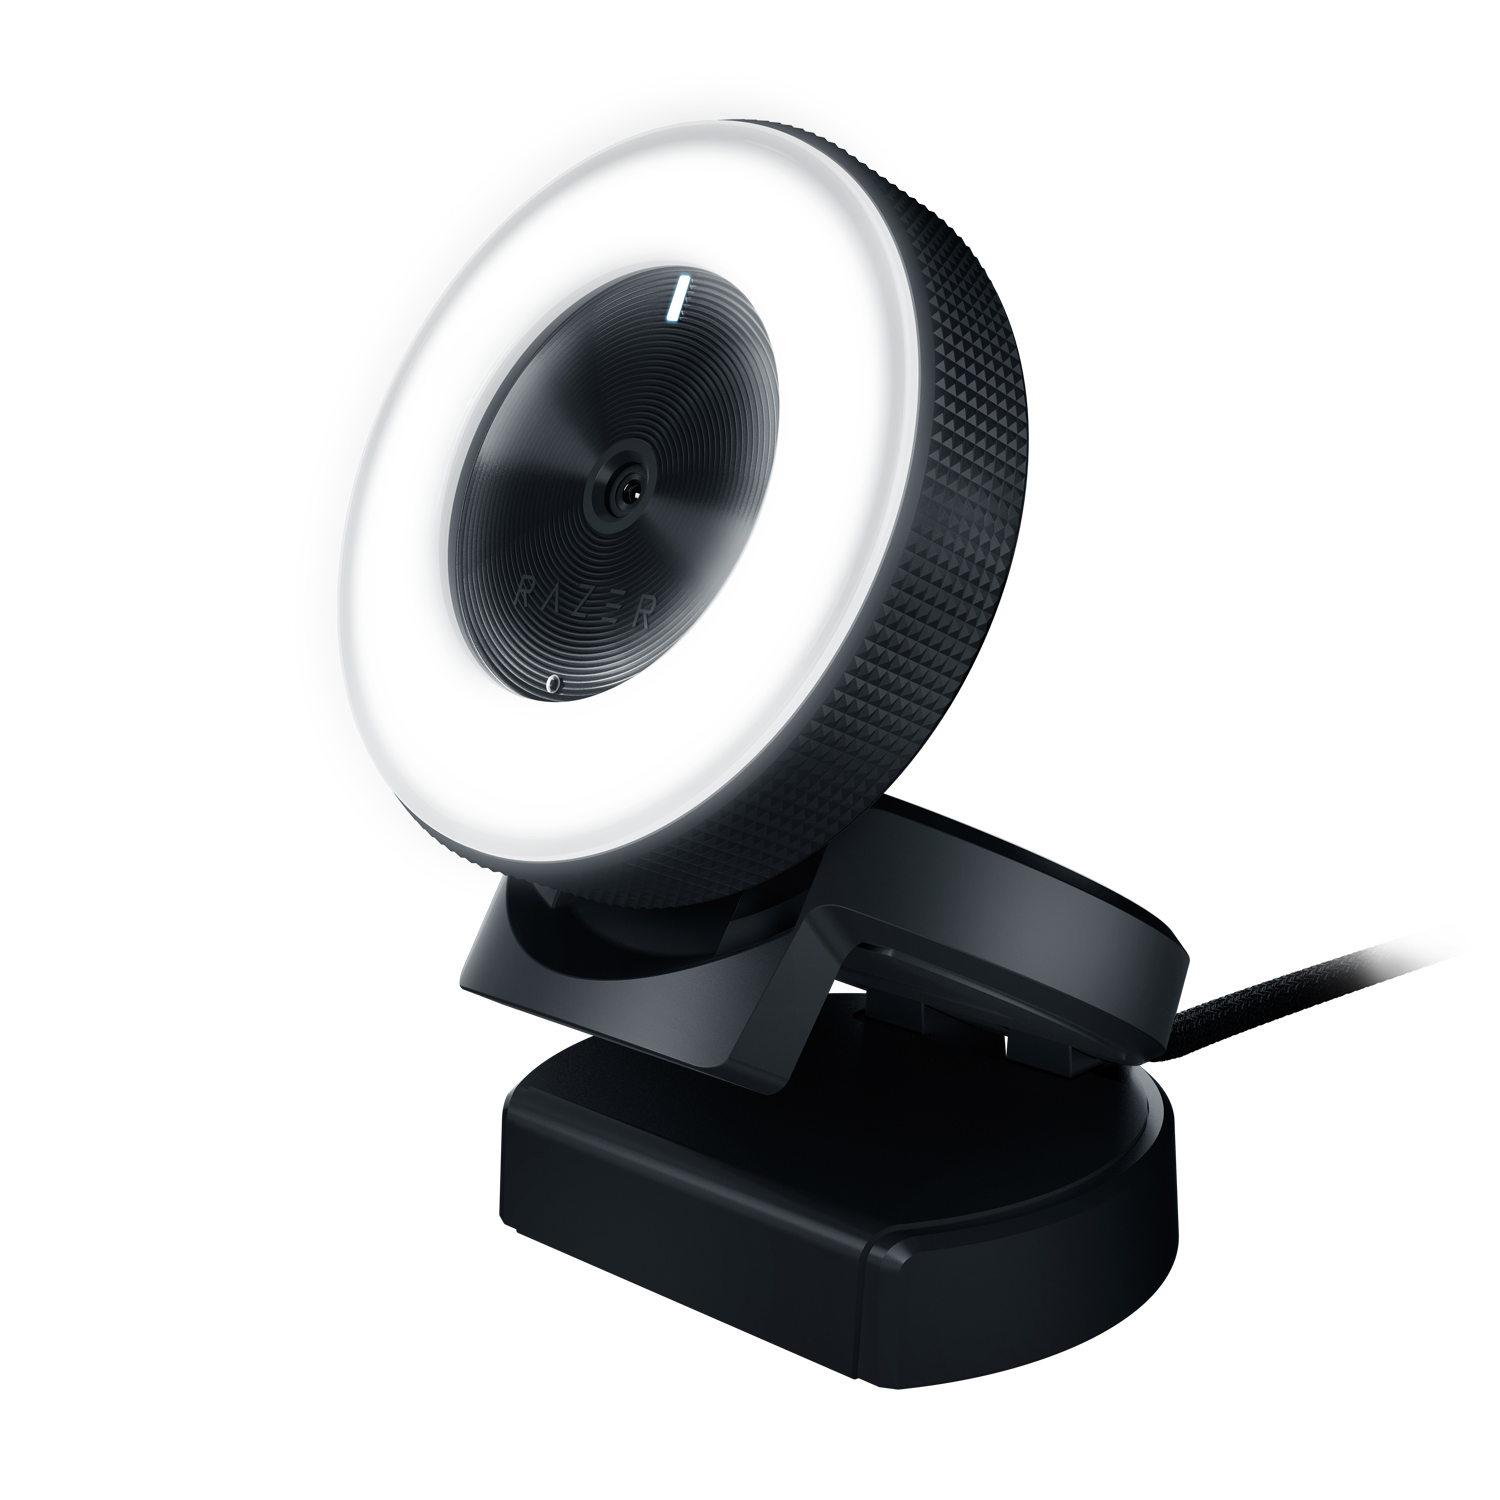 Razer Kiyo Streaming Webcam, Full HD, Auto Focus, Ring Light with Adjustable Brightness, Black - image 1 of 10